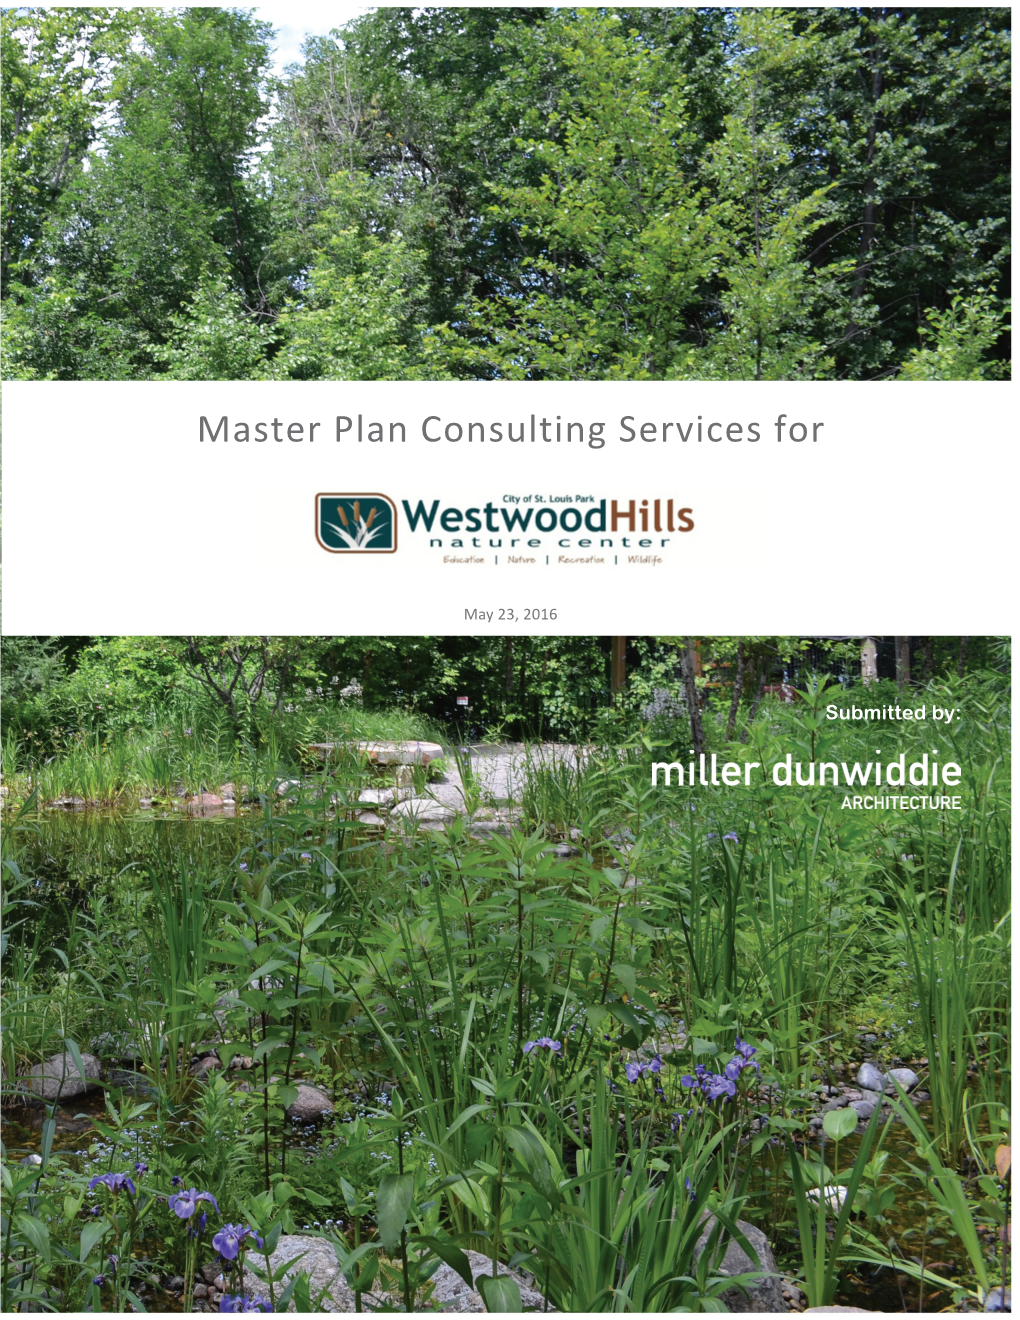 Westwood Hills Nature Center Master Plan